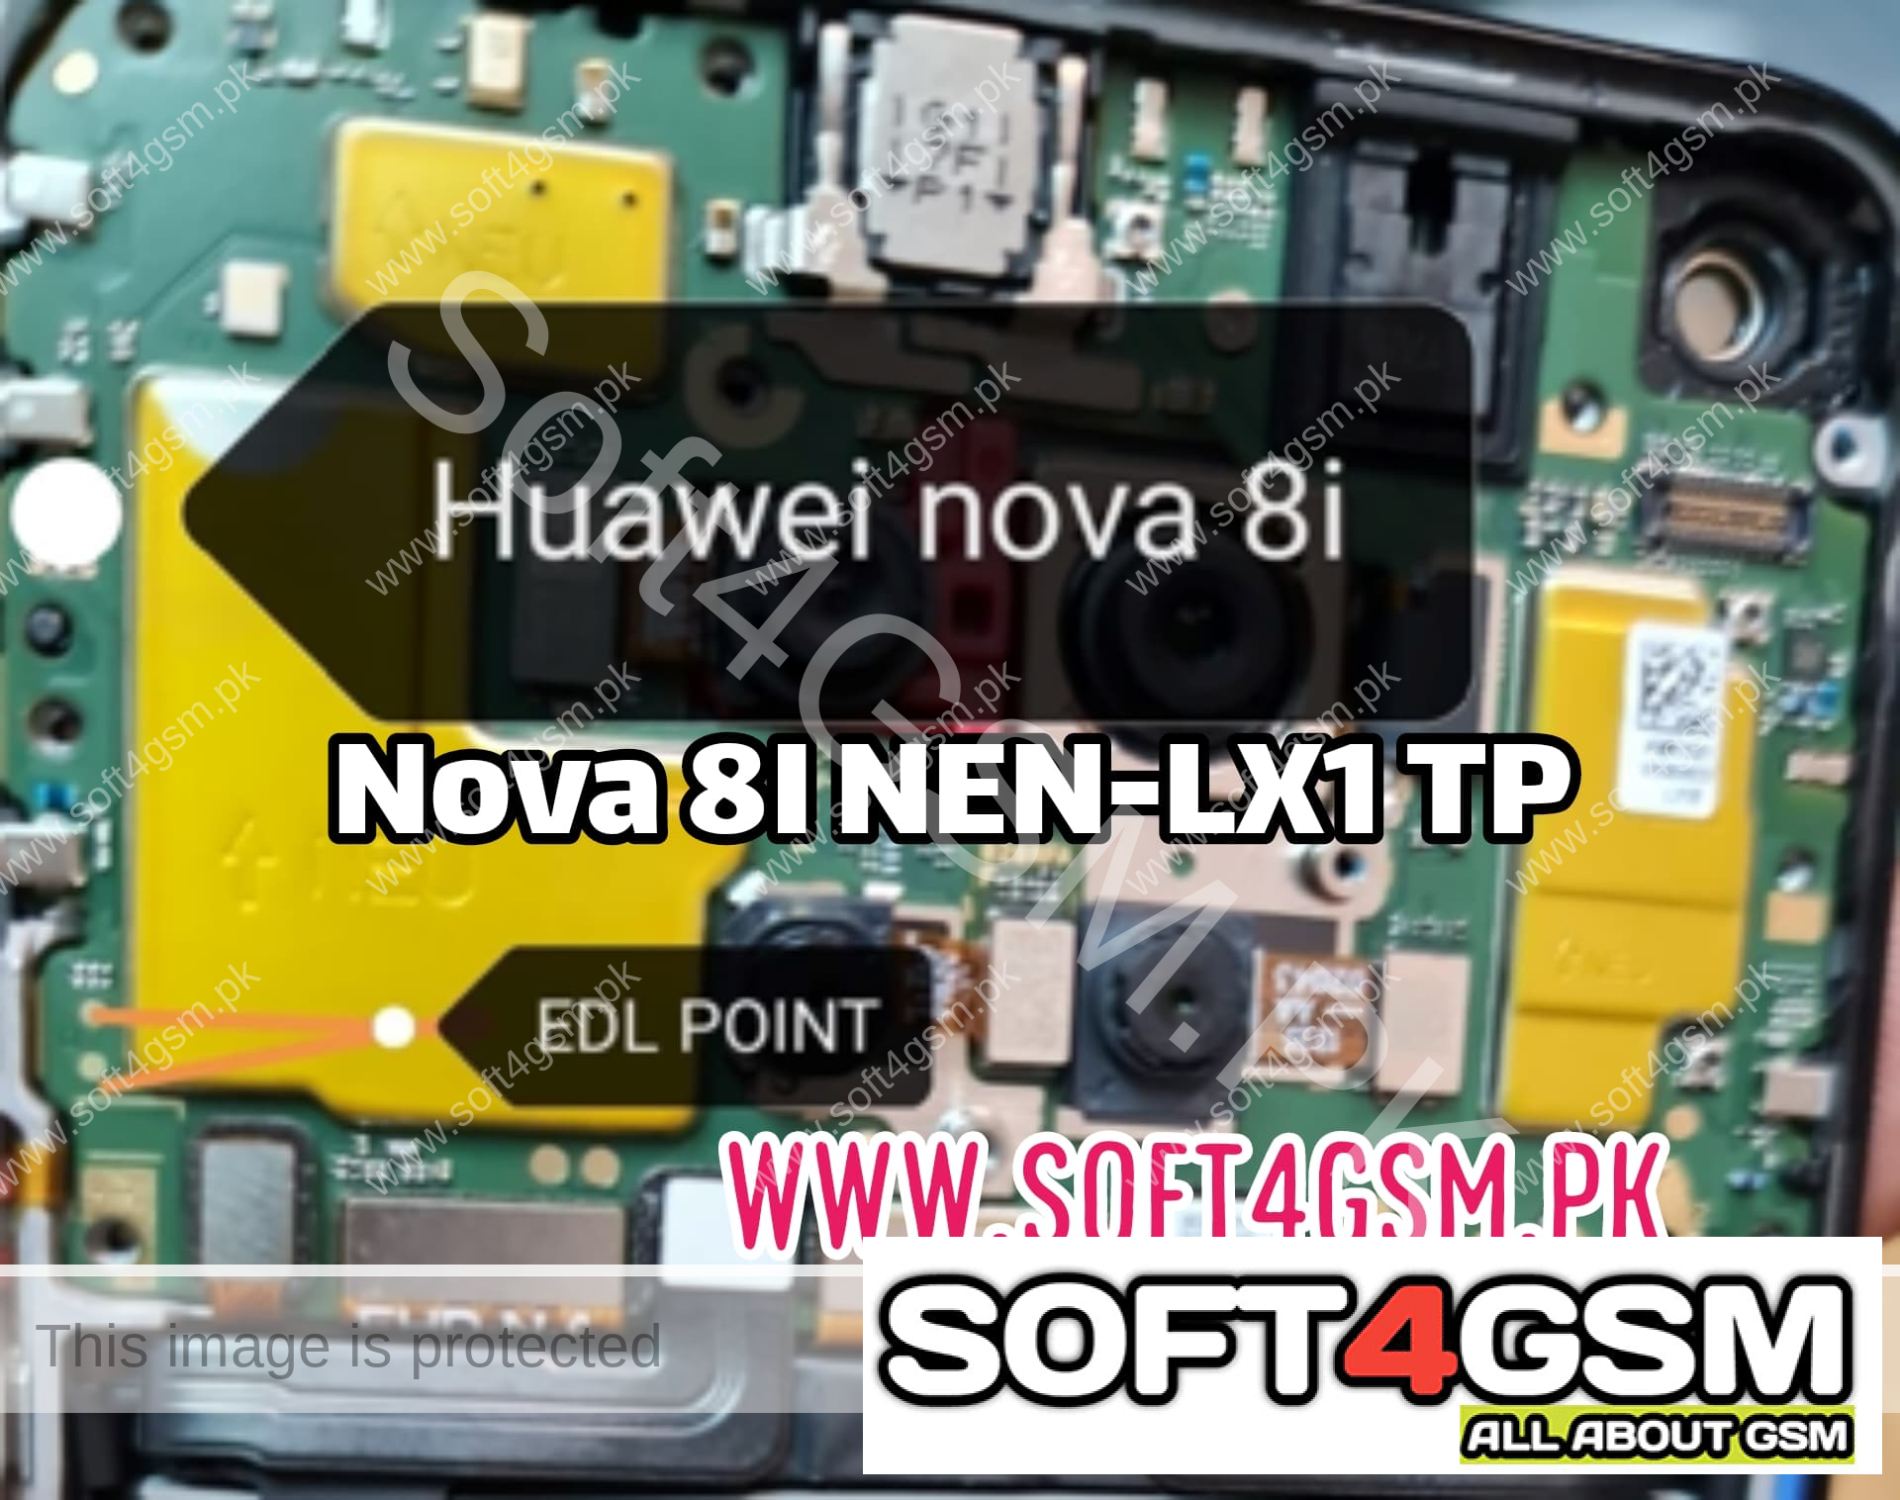 Huawei Nova 8i NEN-LX1 Test Point (TP)